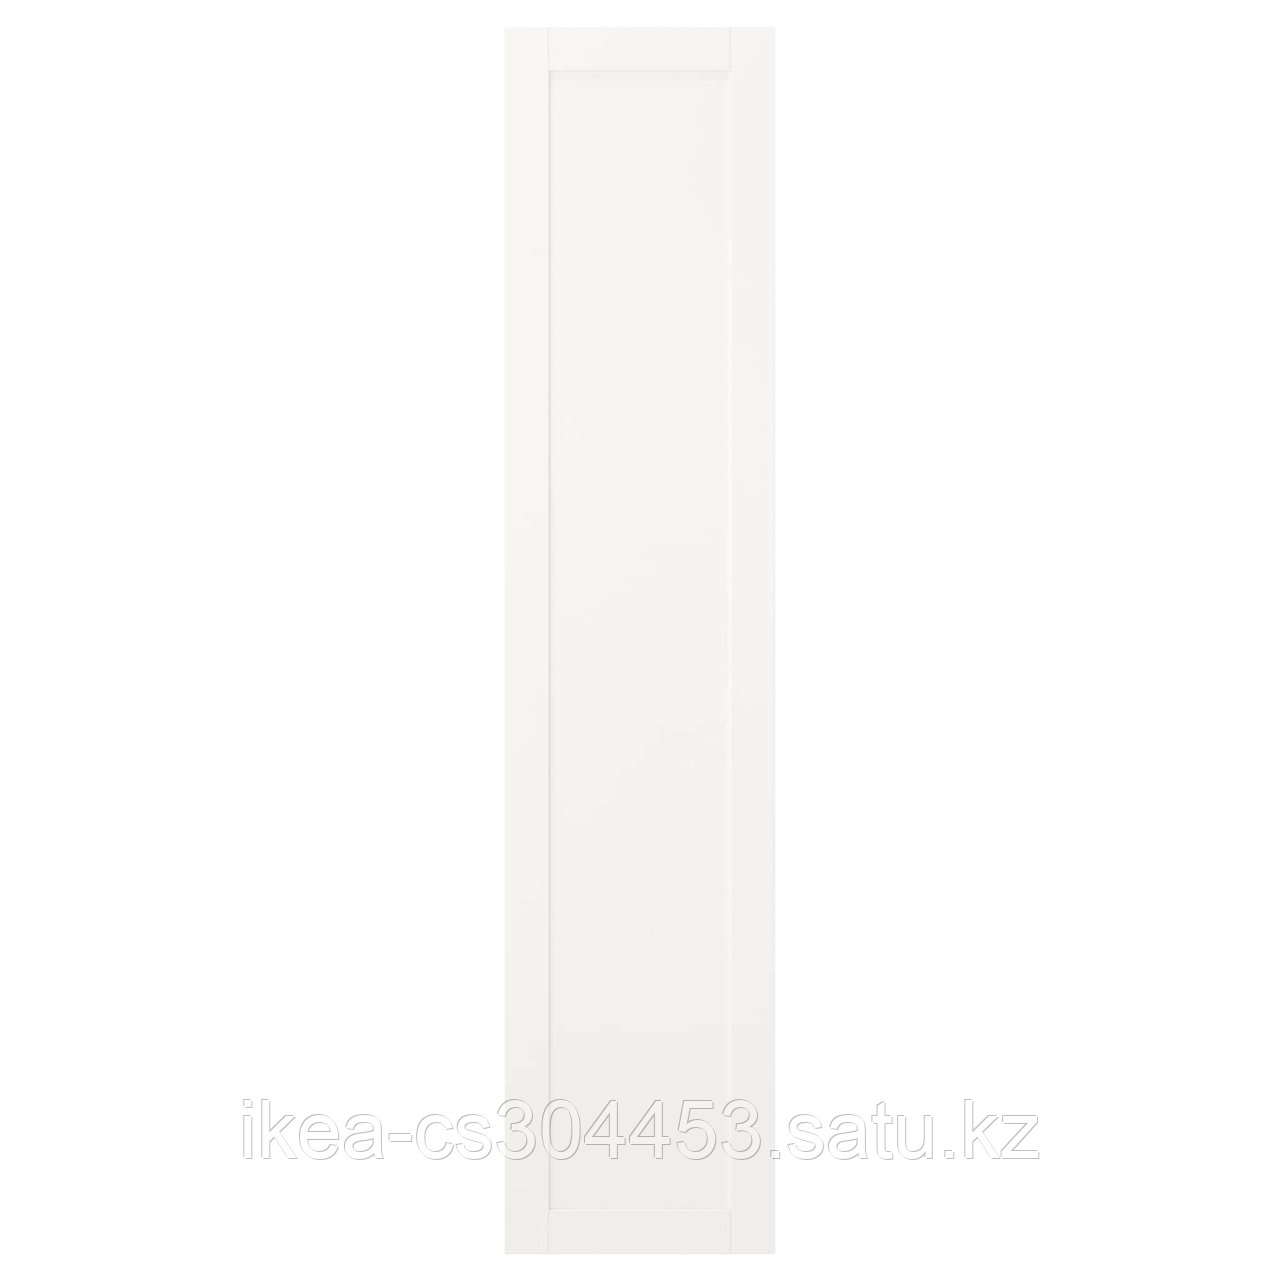 SANNIDAL САННИДАЛЬ Дверца с петлями, белый, 80x40x180 см